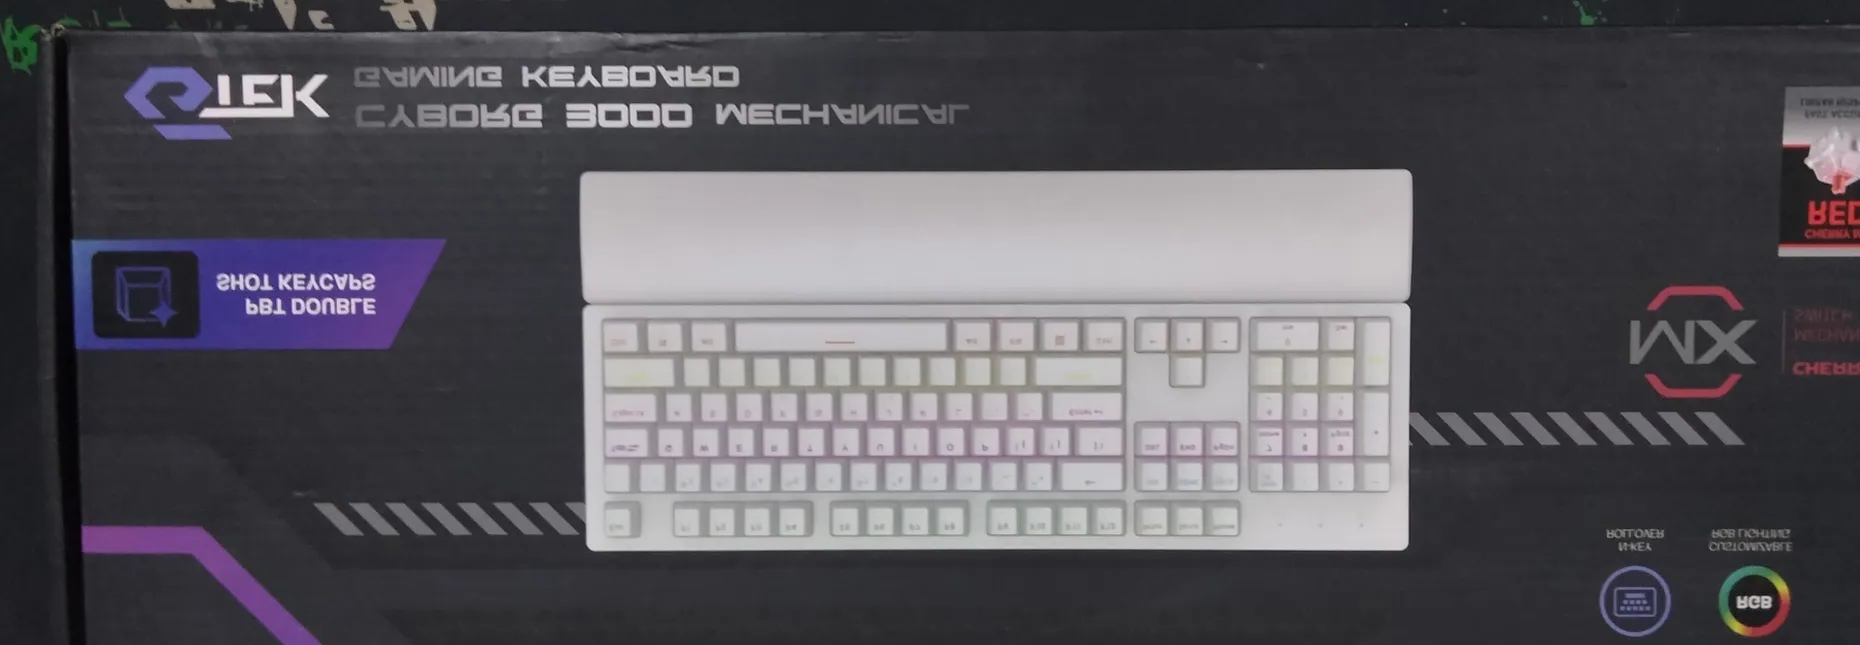 Brand New Gtek Full Size Rgb Mechanical Gaming Keyboard